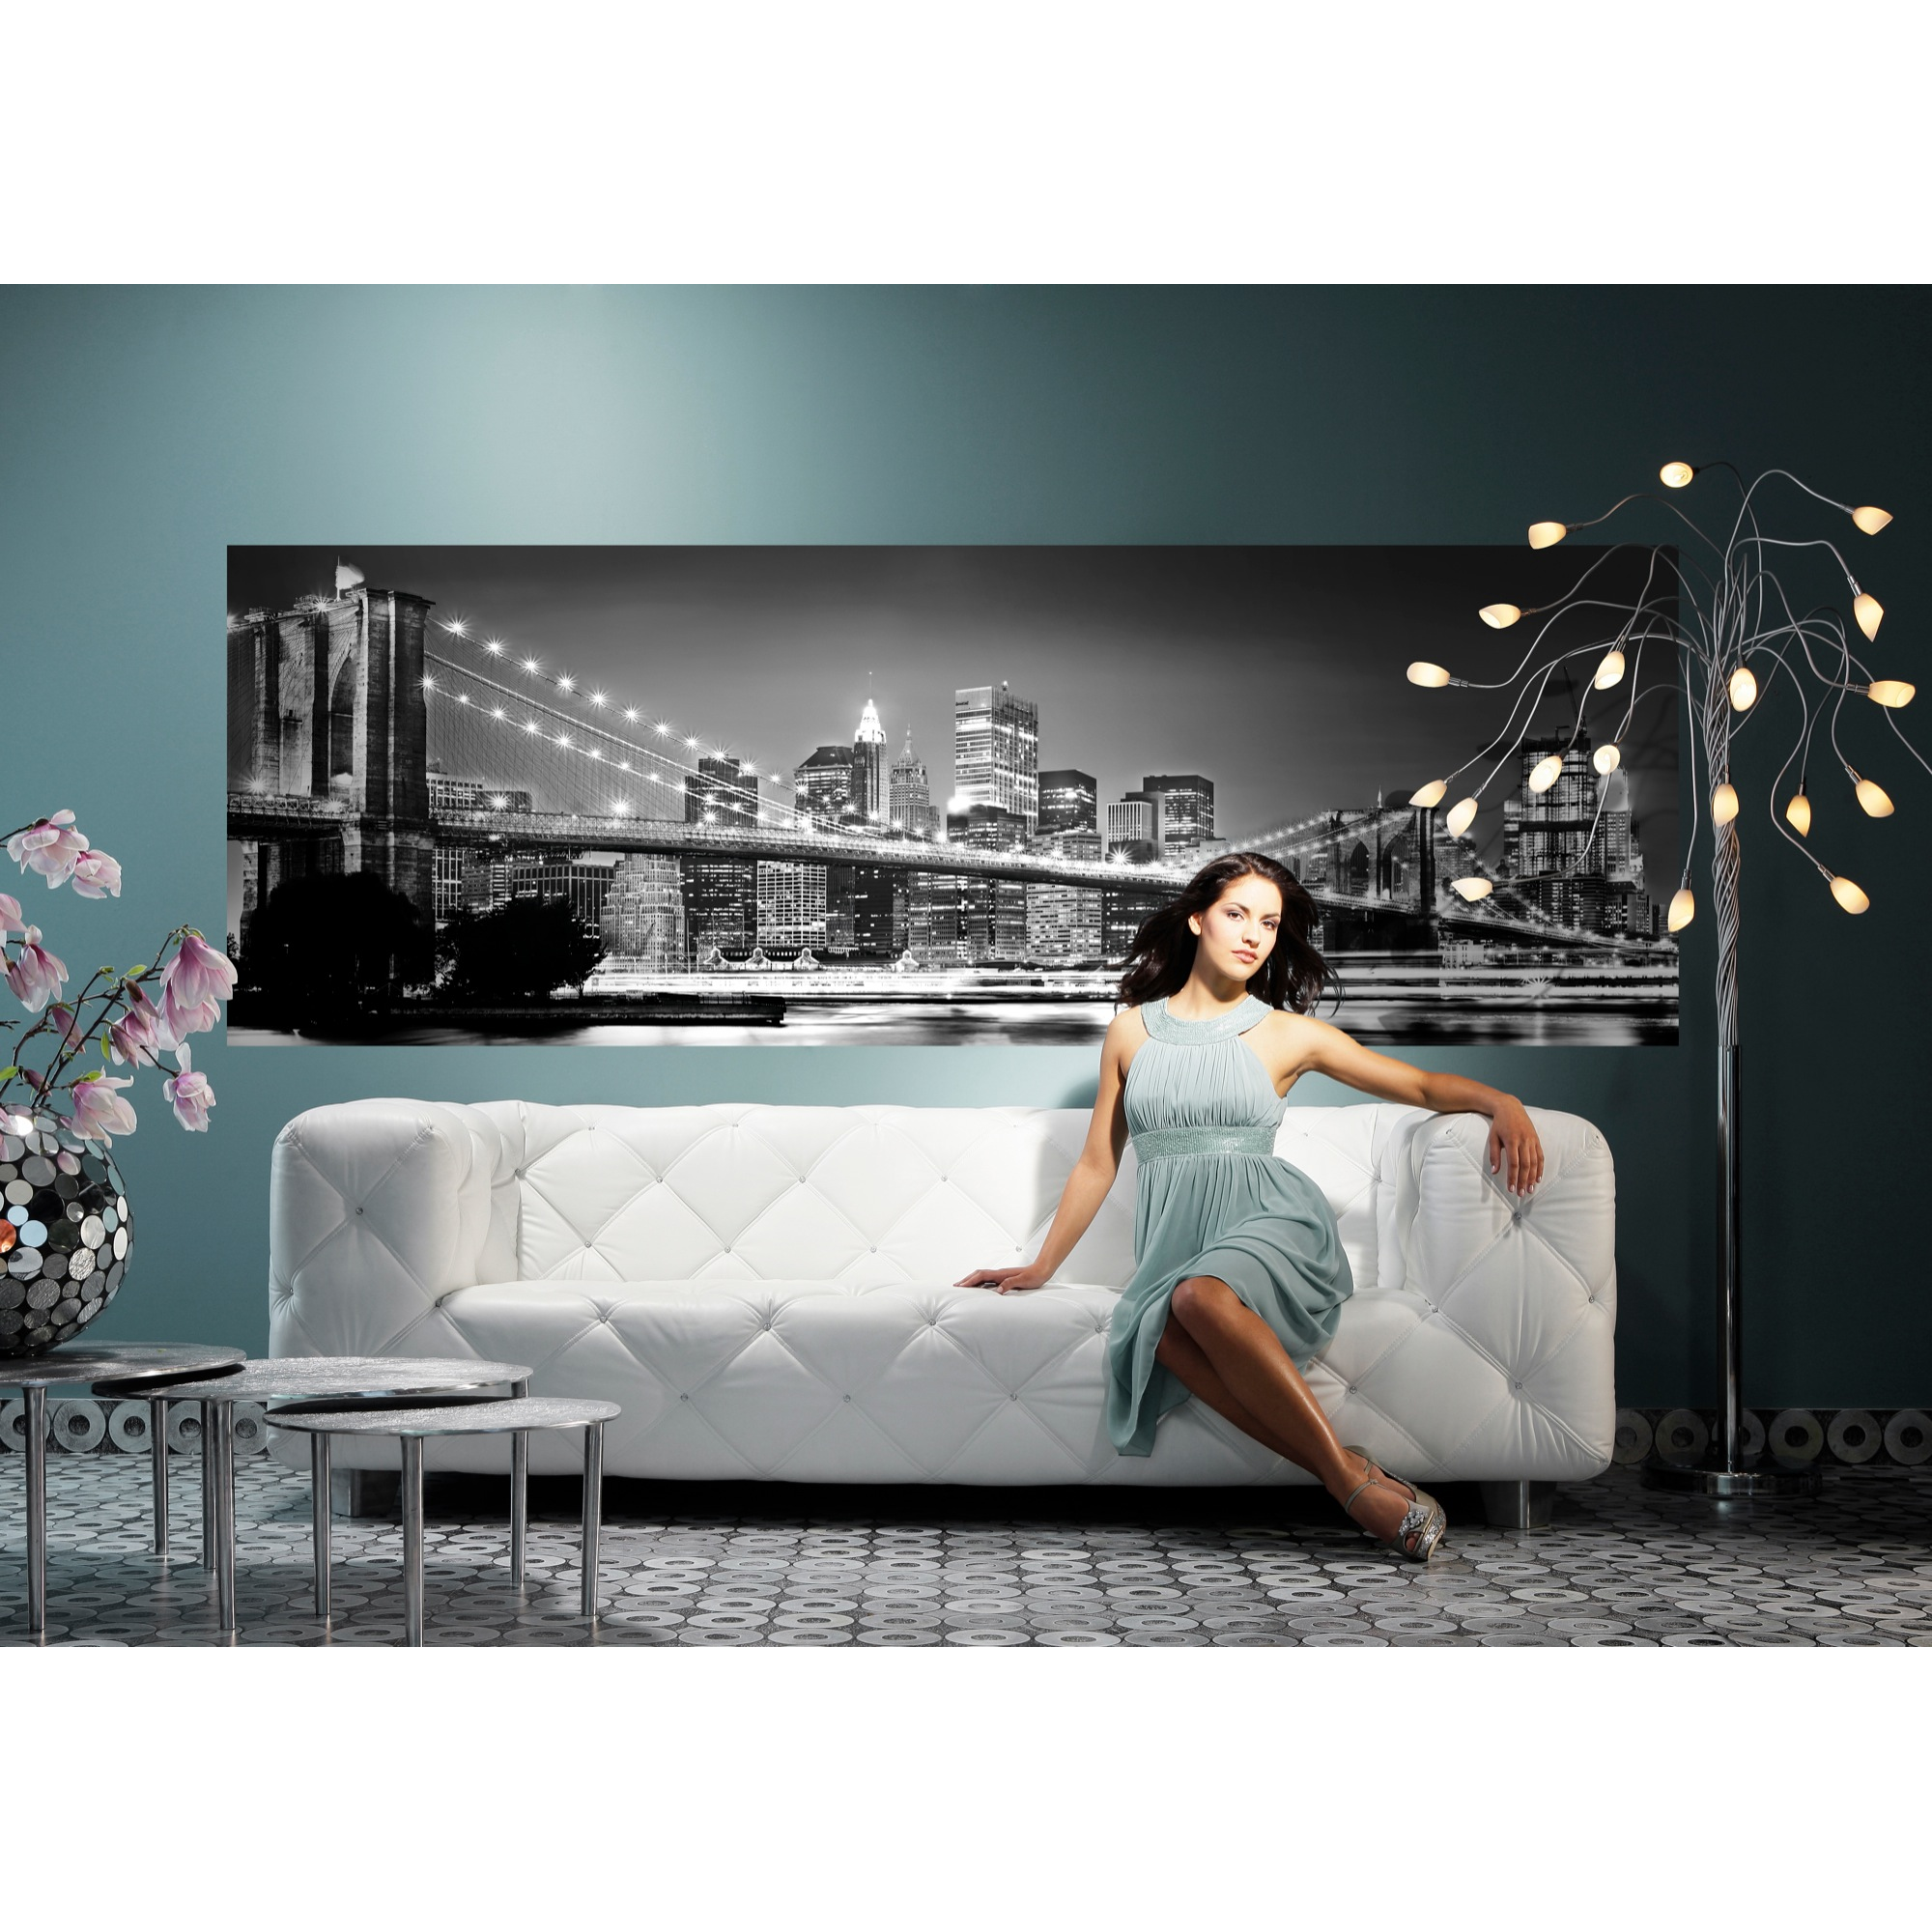 Fototapete 'Brooklyn Bridge' 368 x 127 cm + product picture